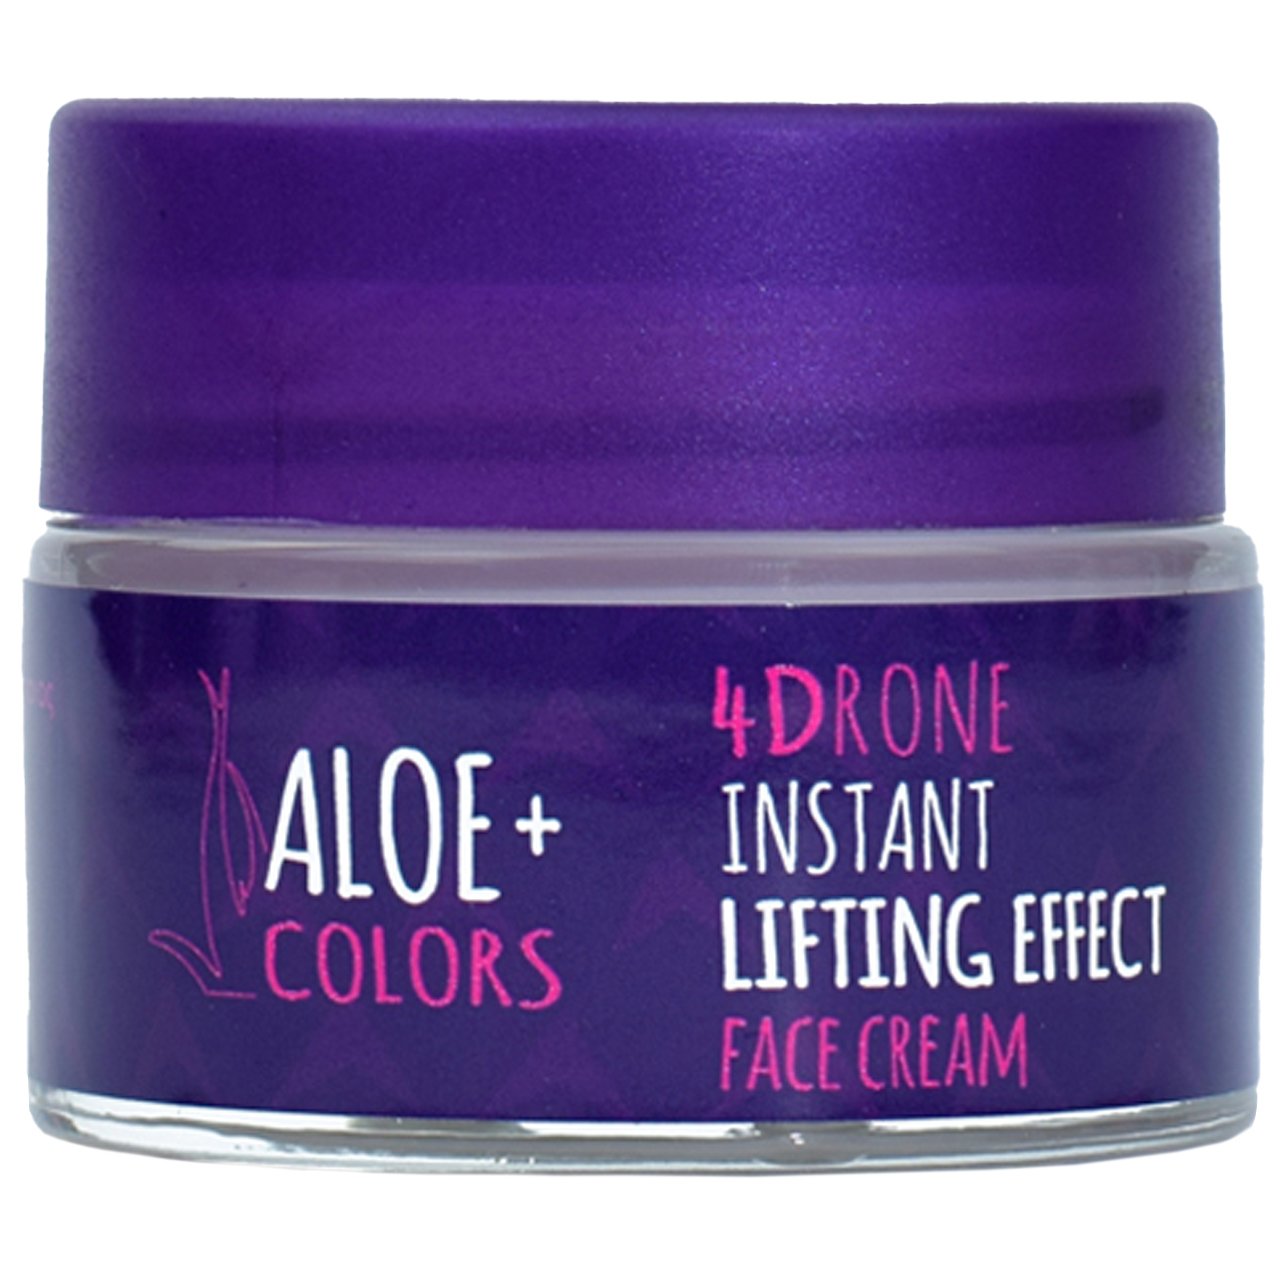 Aloe+ Colors 4Drone Instant Lifting Effect Face Cream Κρέμα Προσώπου για Ανόρθωση & Λάμψη της Επιδερμίδας, Κατάλληλη για Όλους τους Τύπους Δέρματος 50ml